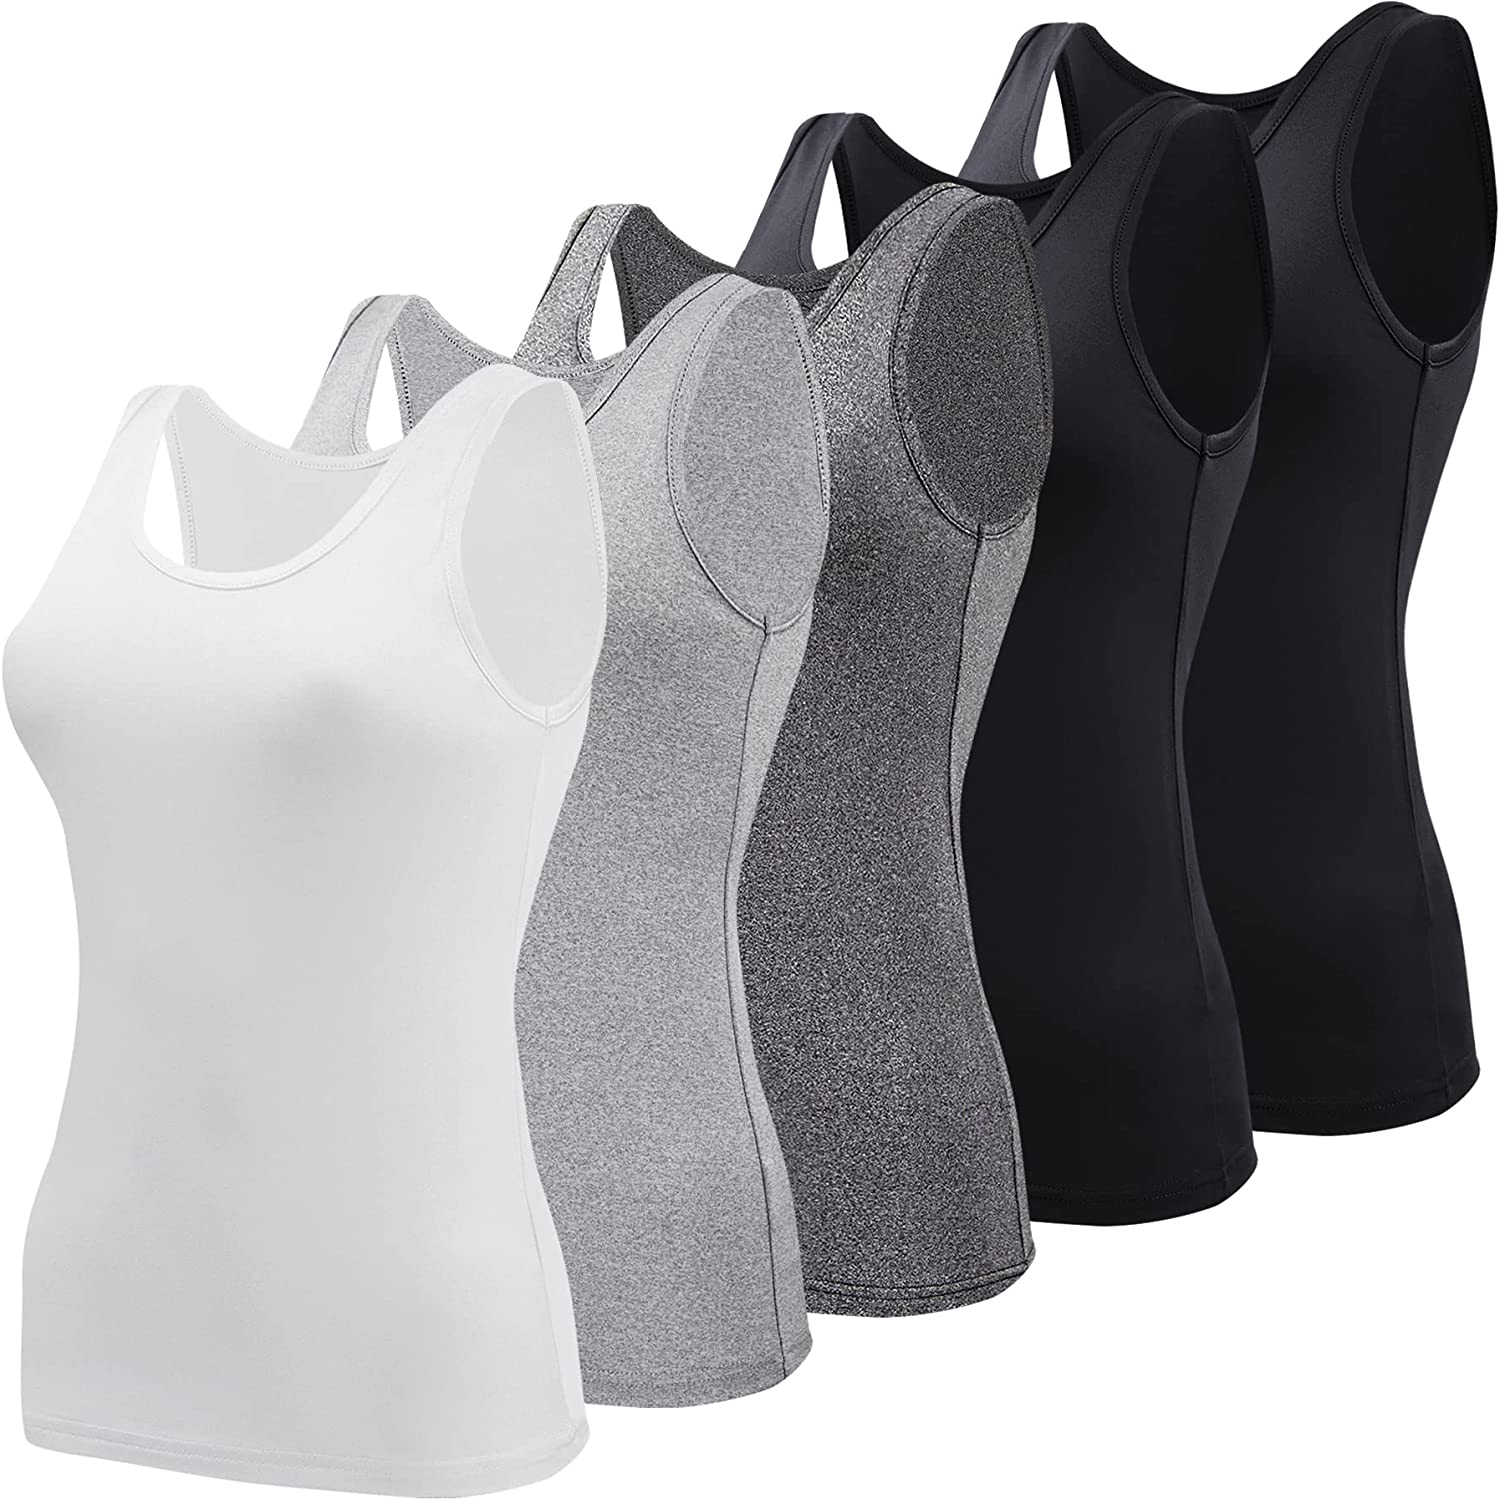 BQTQ 5 Pcs Basic Tank Tops for Women Undershirt Tank Top Sleeveless Under  Shirts, S Black at  Women's Clothing store